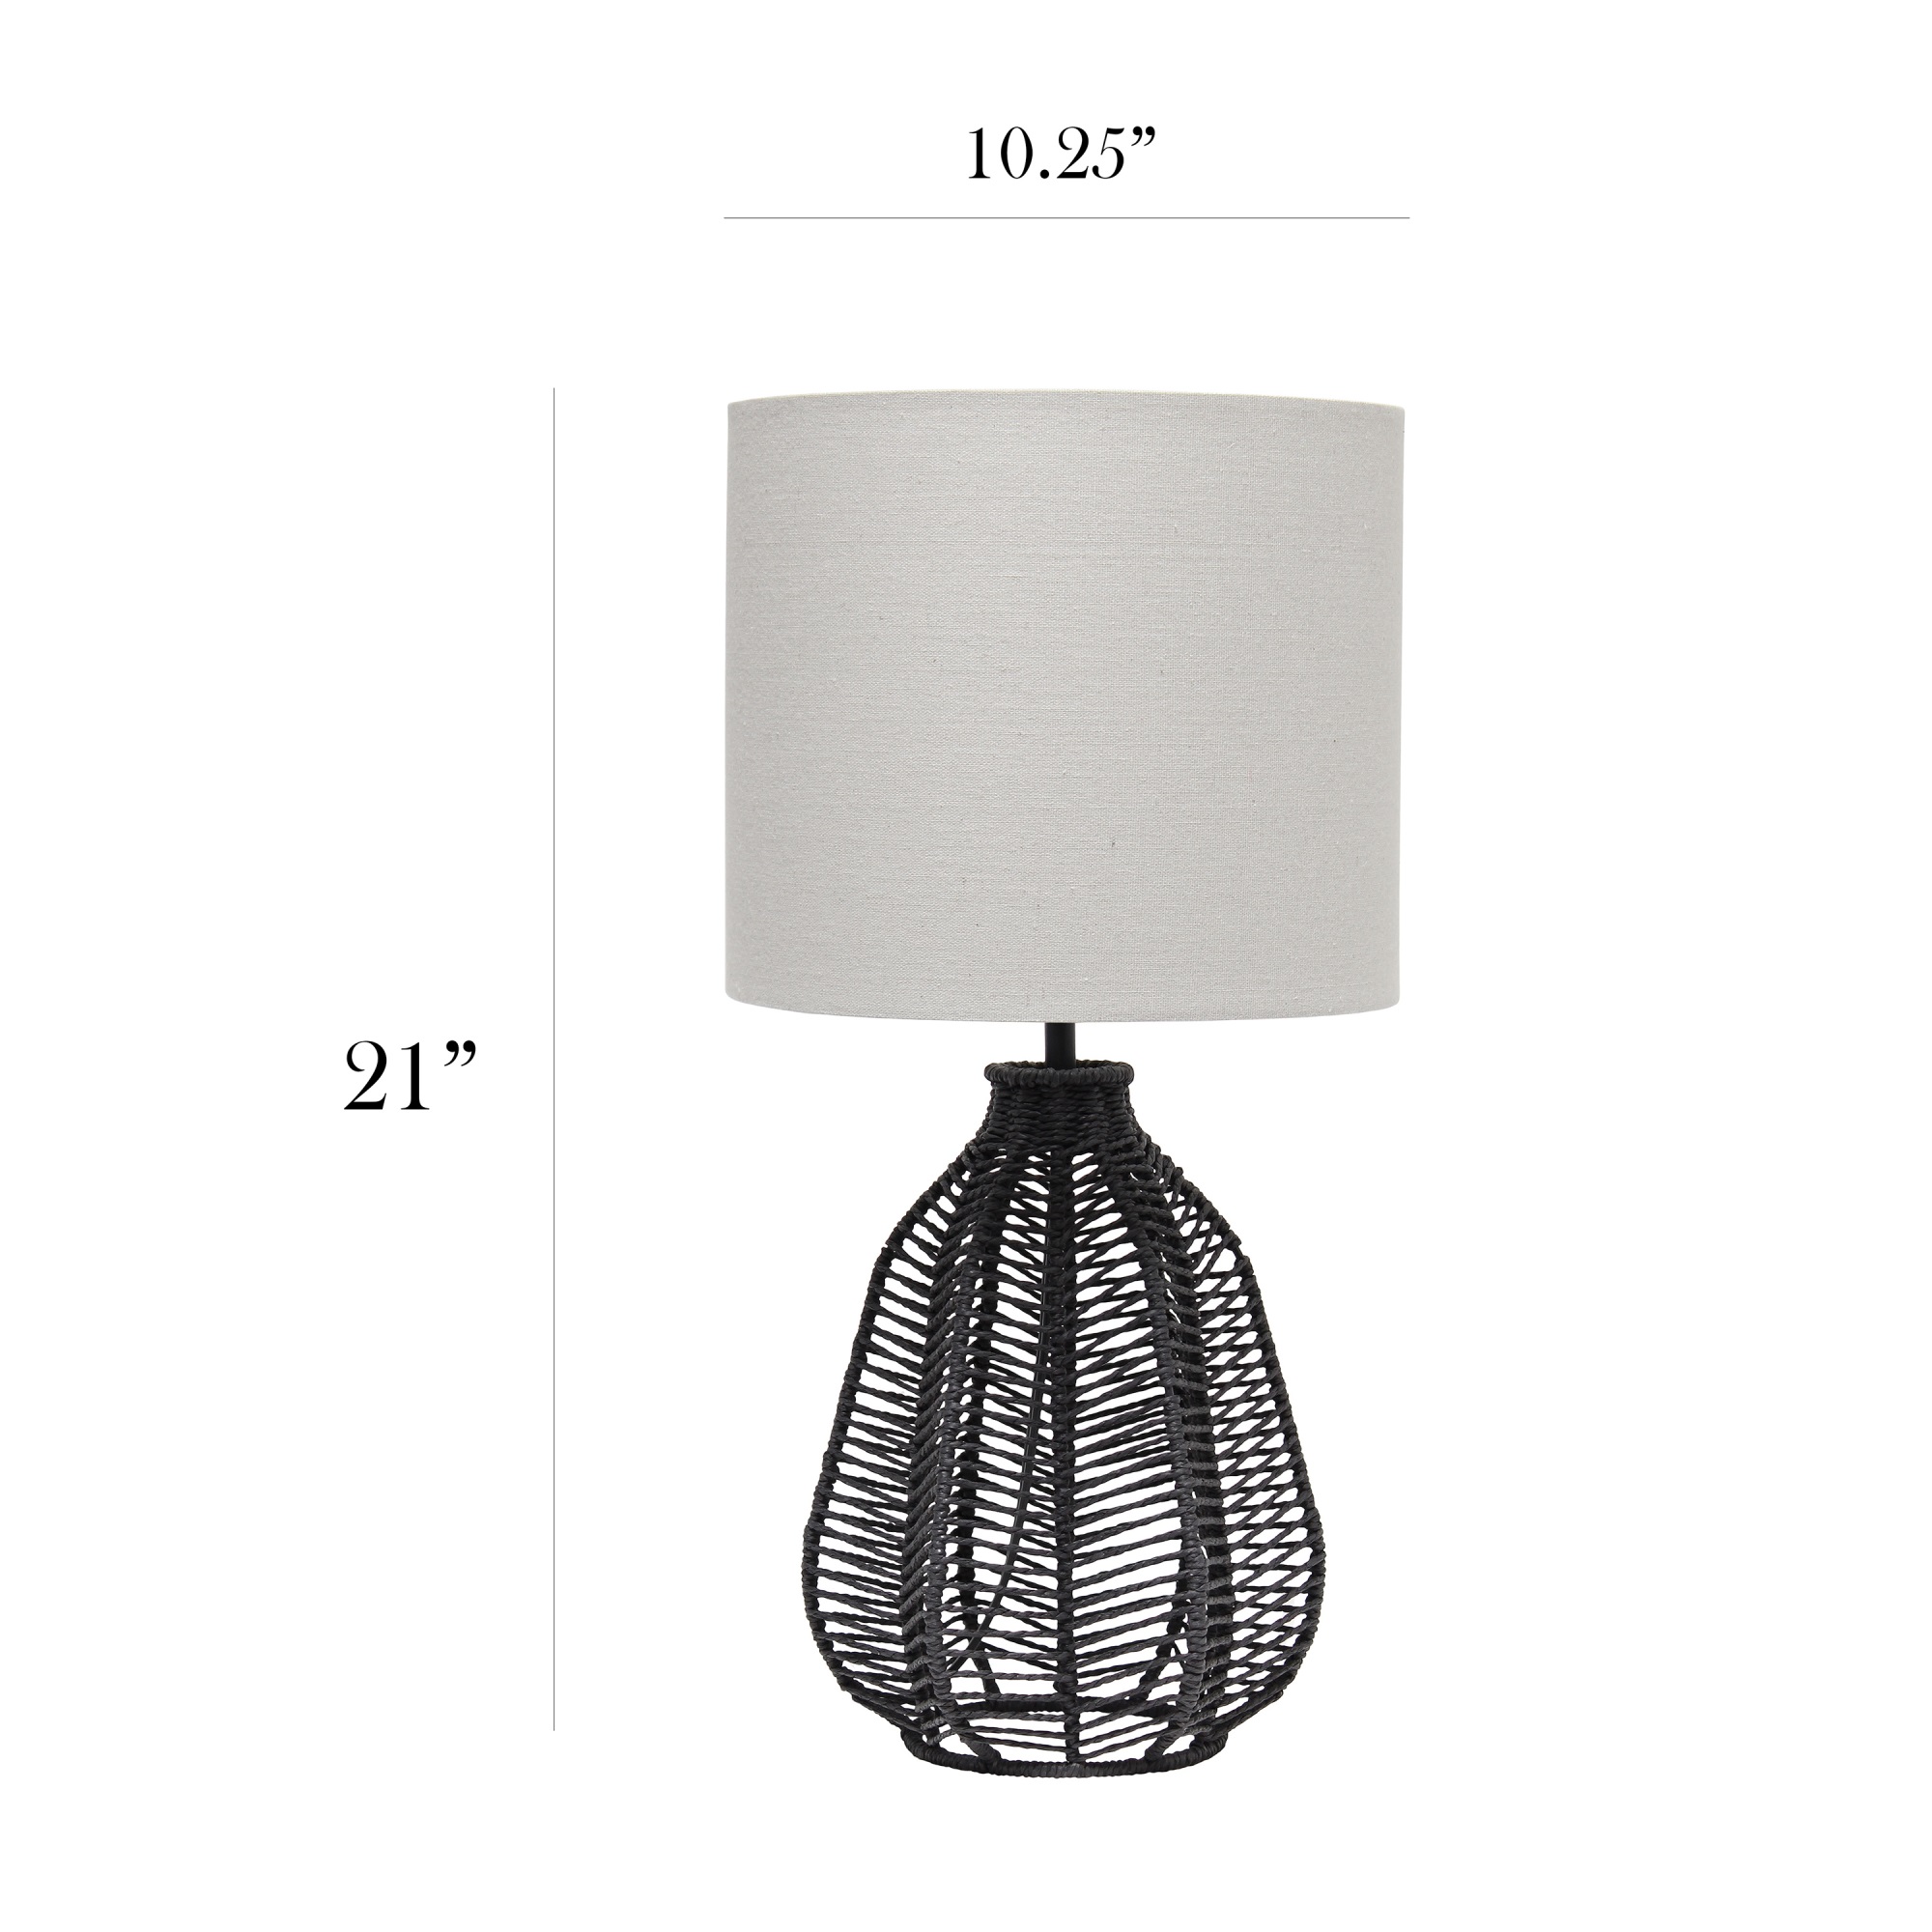 Elegant Designs 21" Tall Boho Coastal Inspired Rustic Paper Rope Rattan Wicker Look Standard Table Desk Nightstand Lamp with L